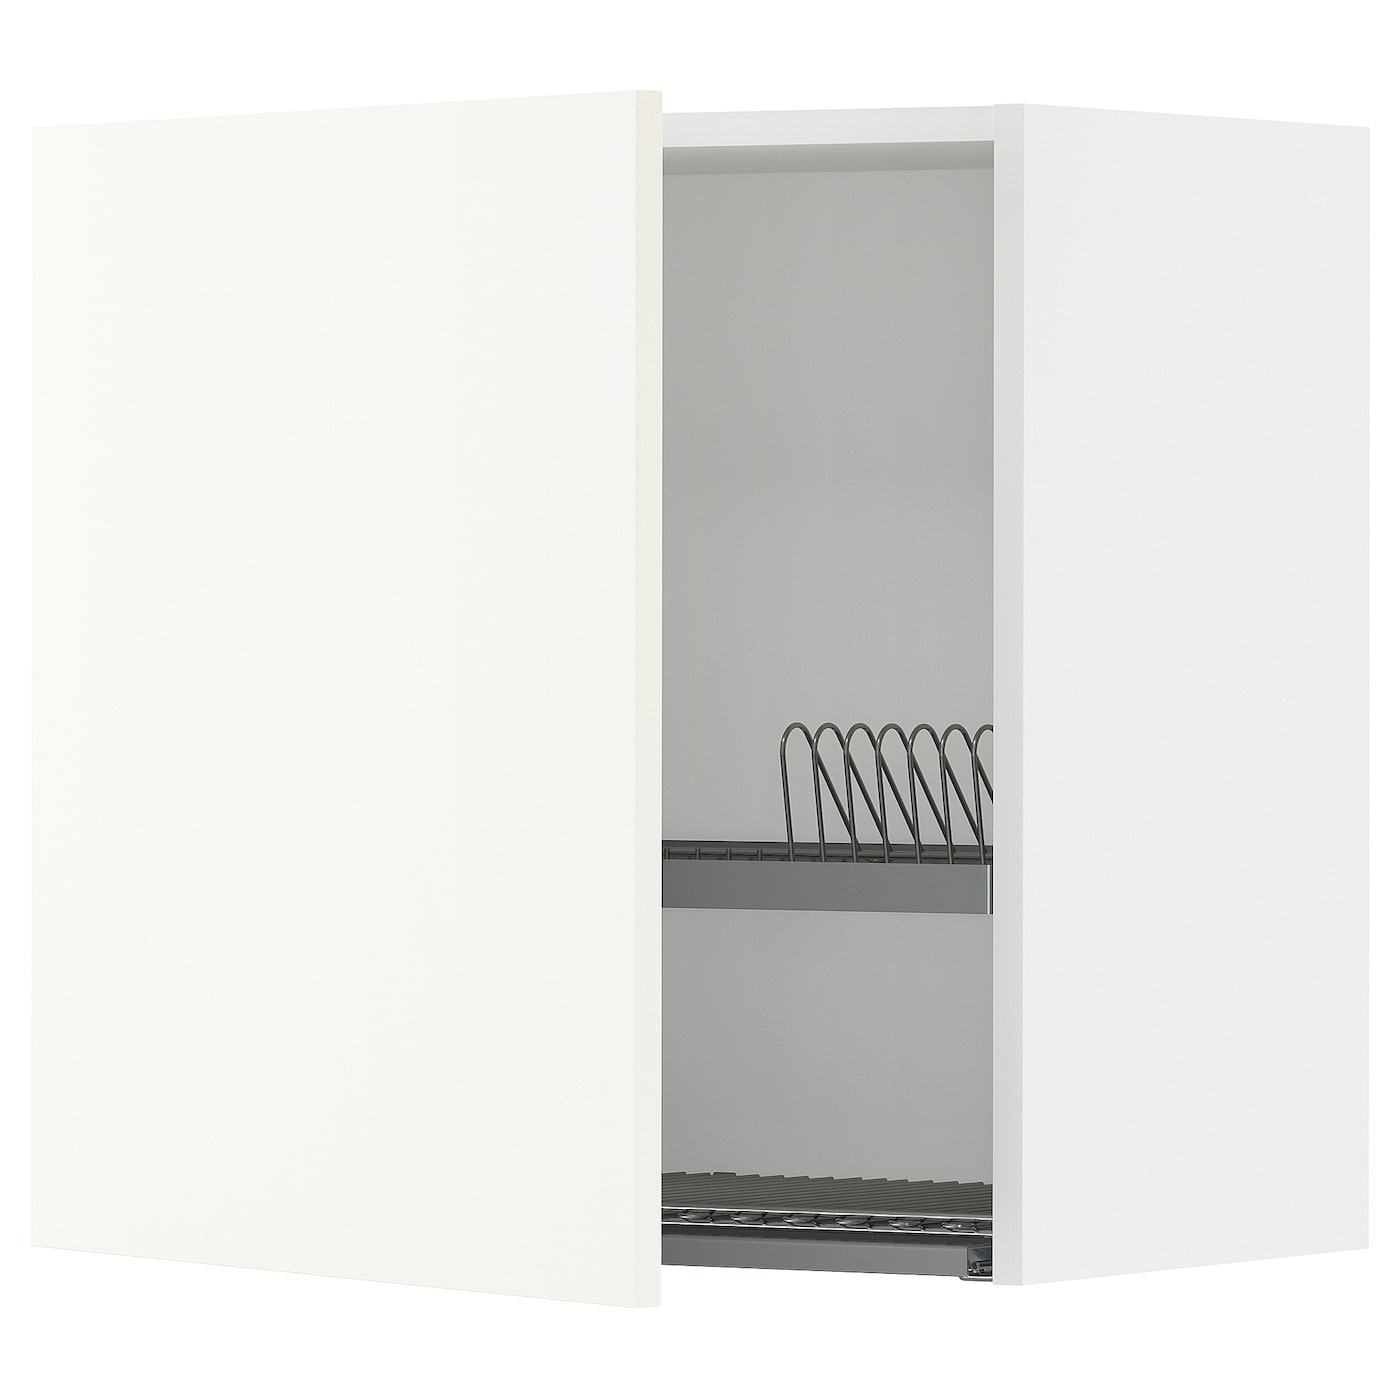 Навесной шкаф с сушилкой - METOD IKEA/ МЕТОД ИКЕА, 60х60 см, белый